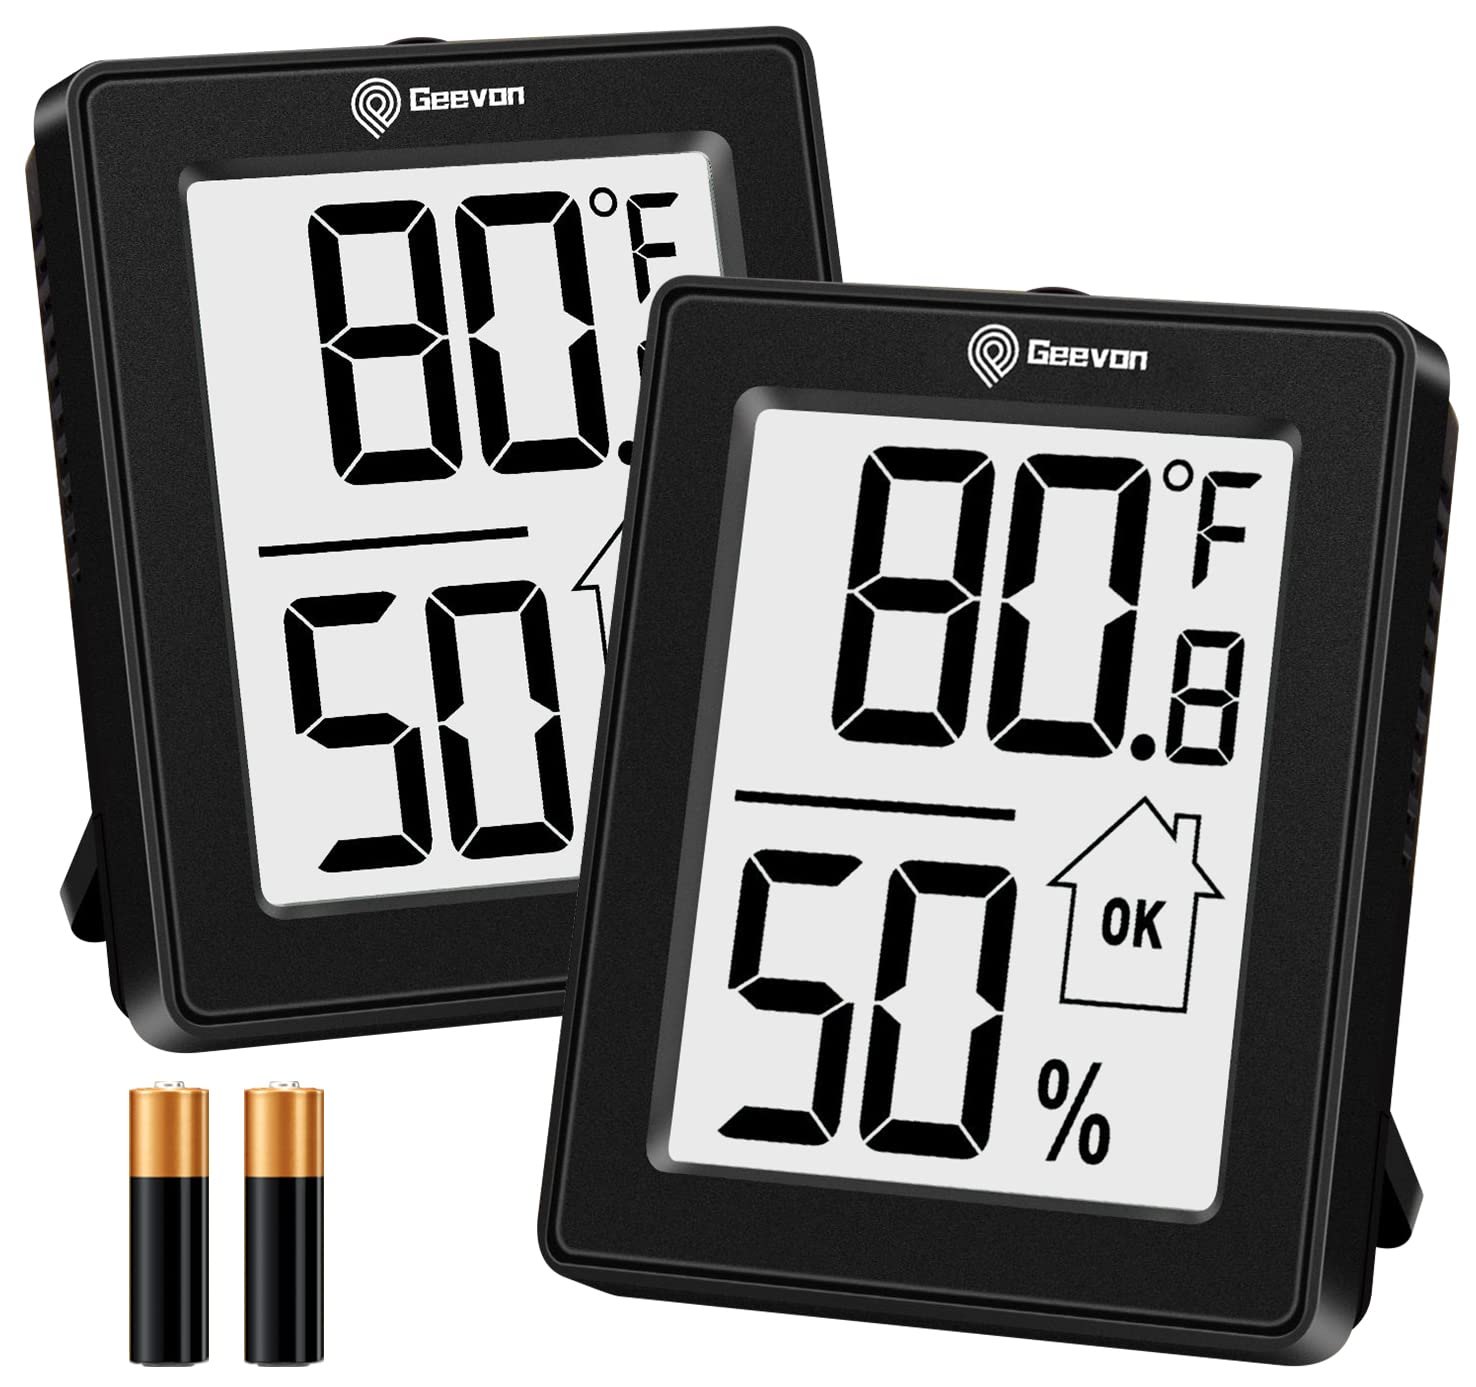 geevon Hygrometer Indoor Thermometer Room Humidity gauge with Battery,Digital Temperature gauge Humidity Meter Indicator for Hom